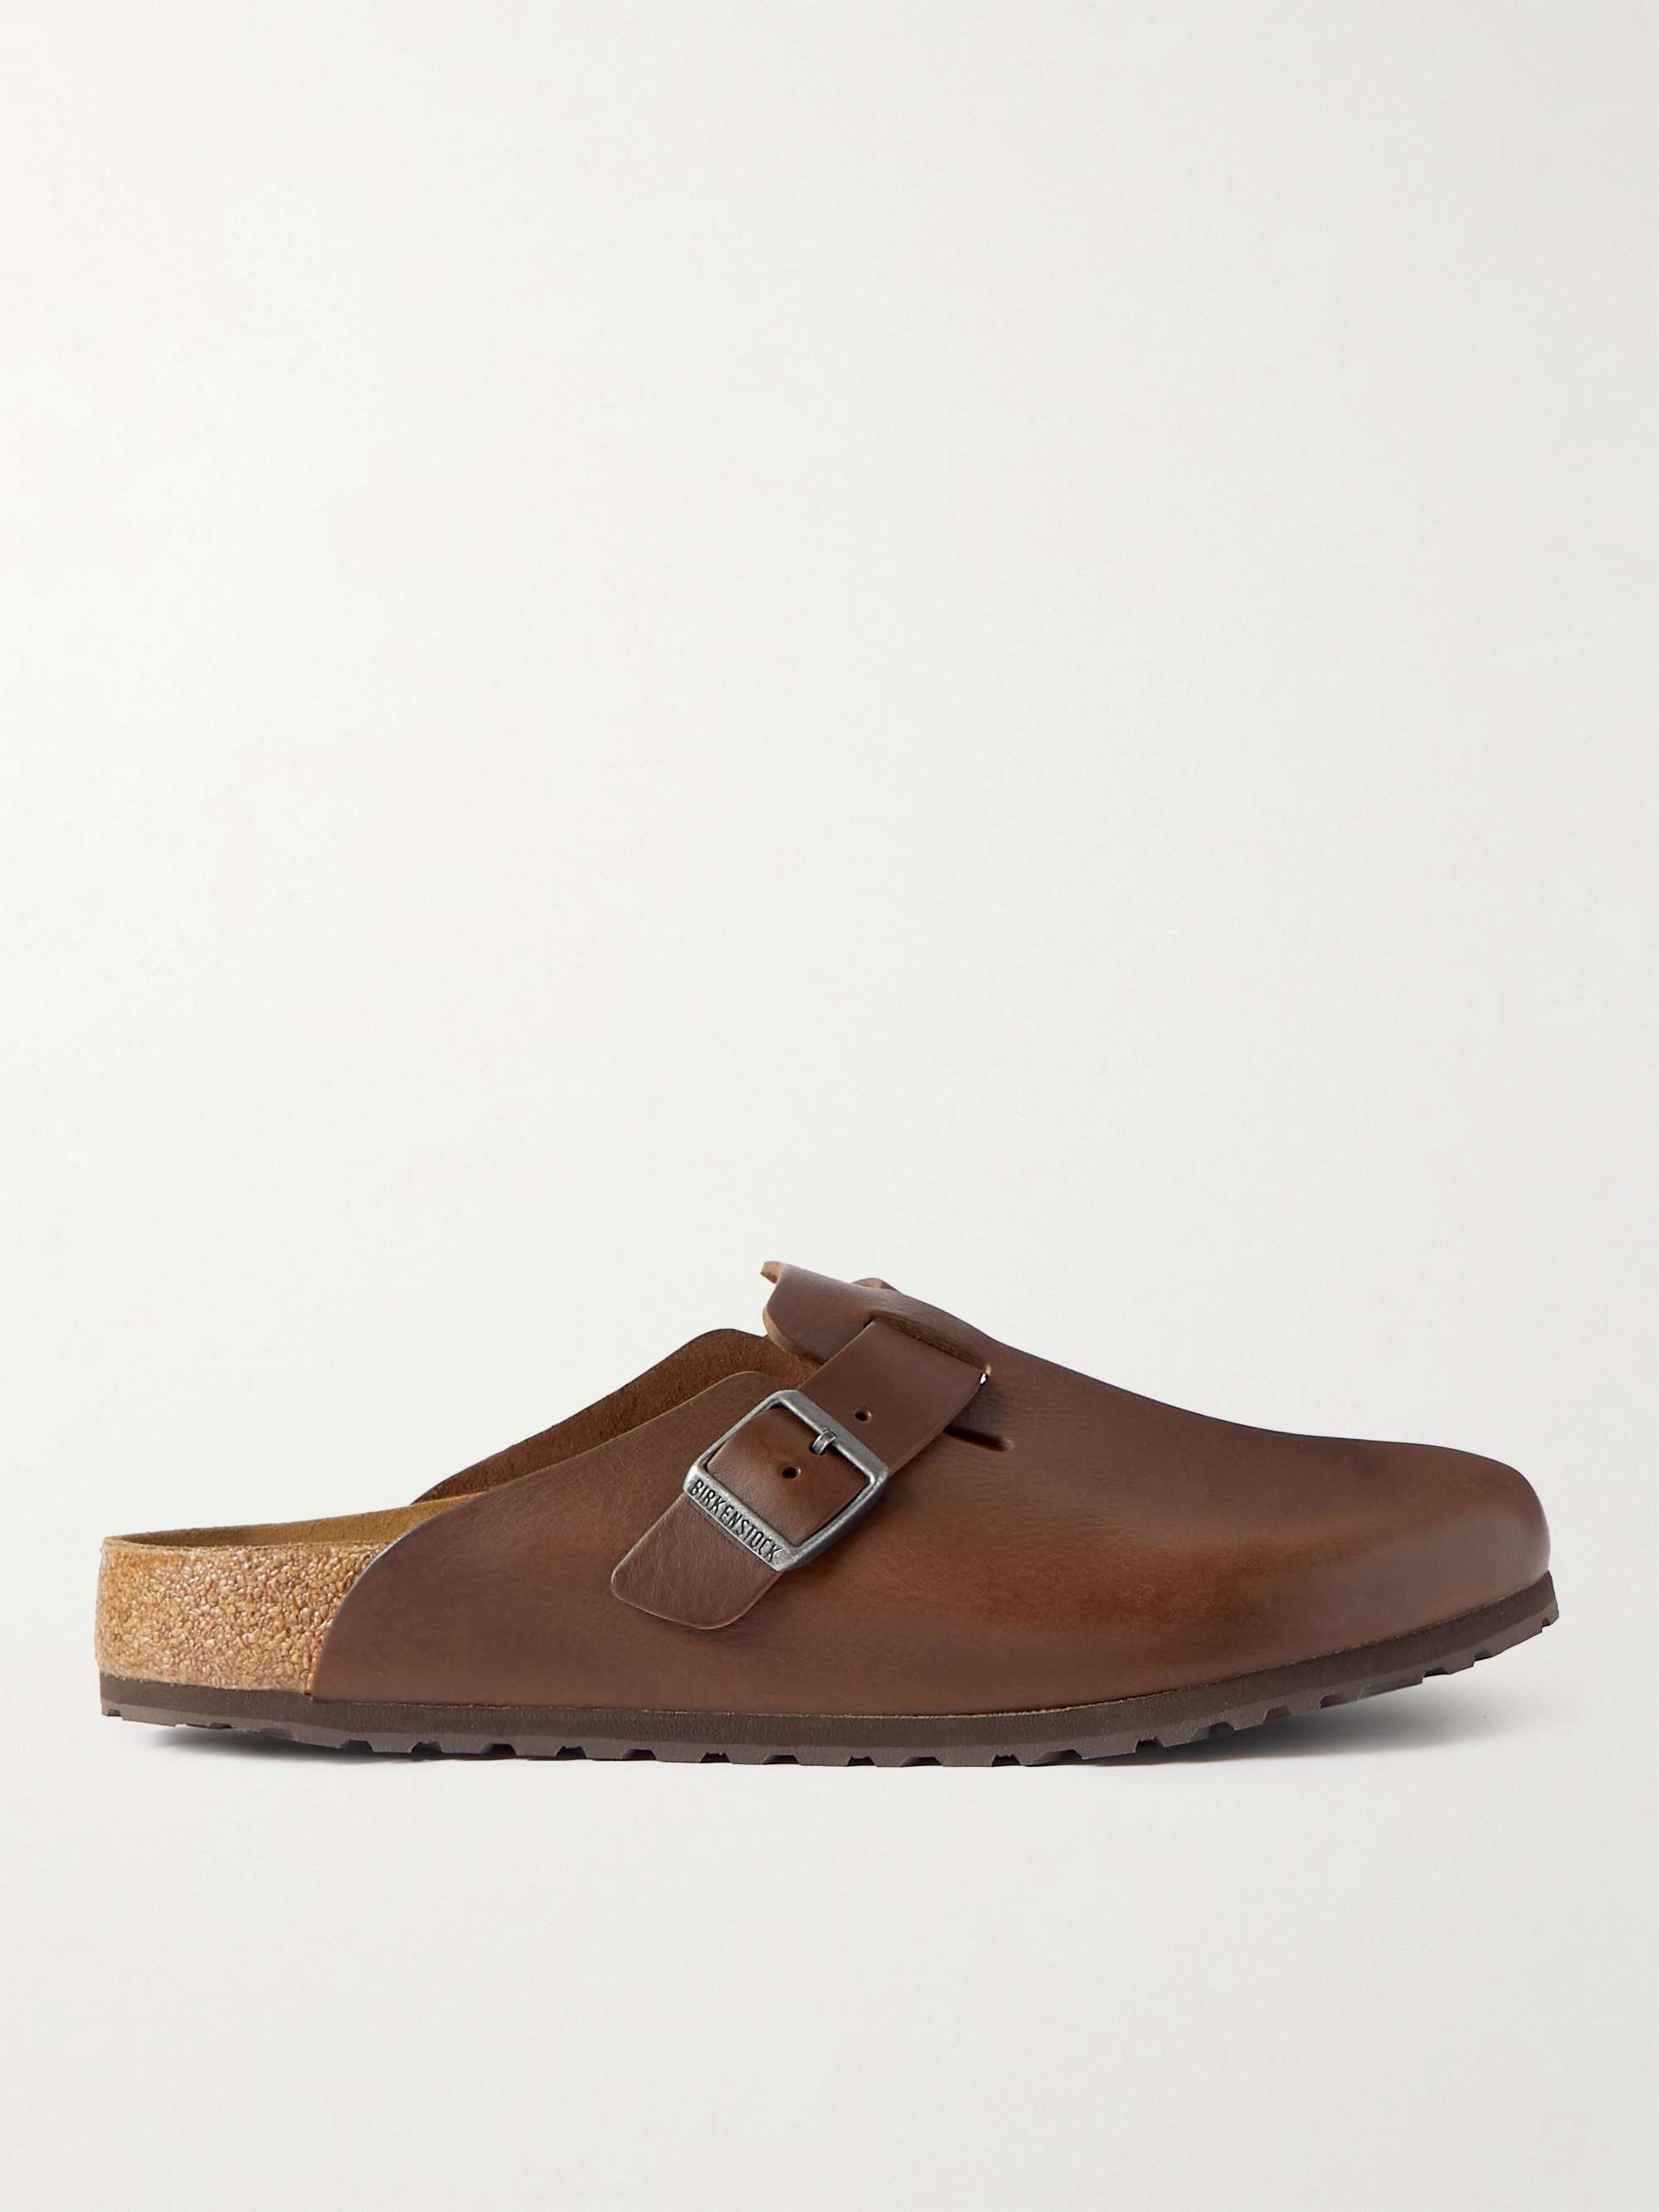 Brown Boston Leather Sandals | BIRKENSTOCK | MR PORTER